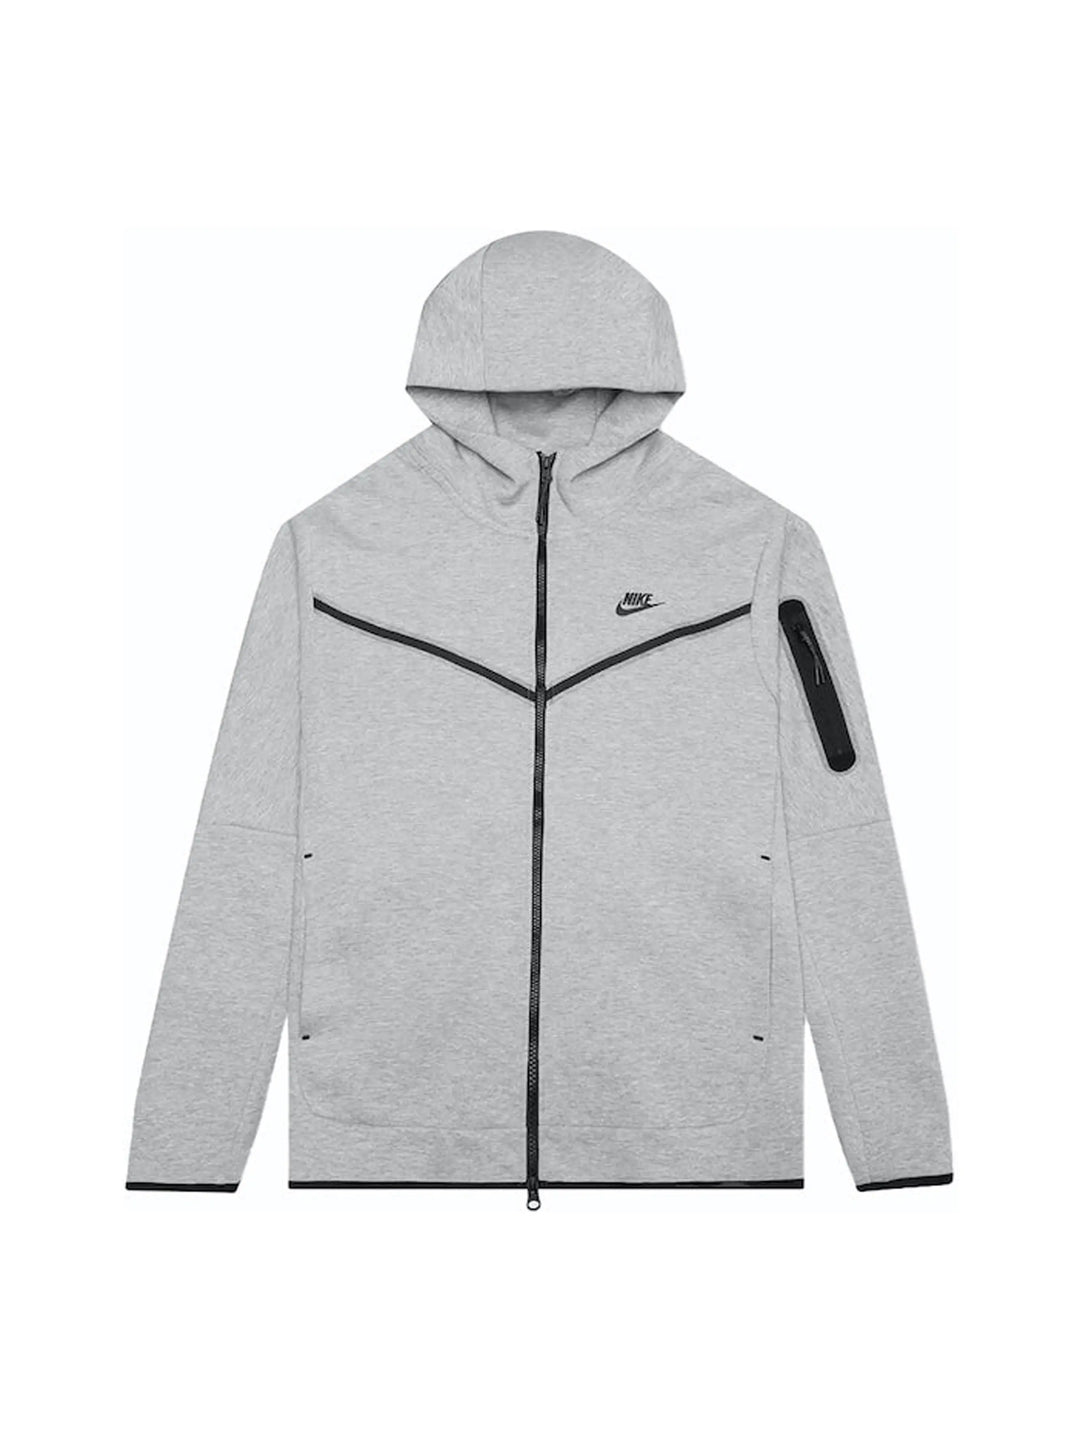 Nike Sportswear Tech Fleece Full-Zip Hoodie Heather Grey/Black in Melbourne, Australia - Prior